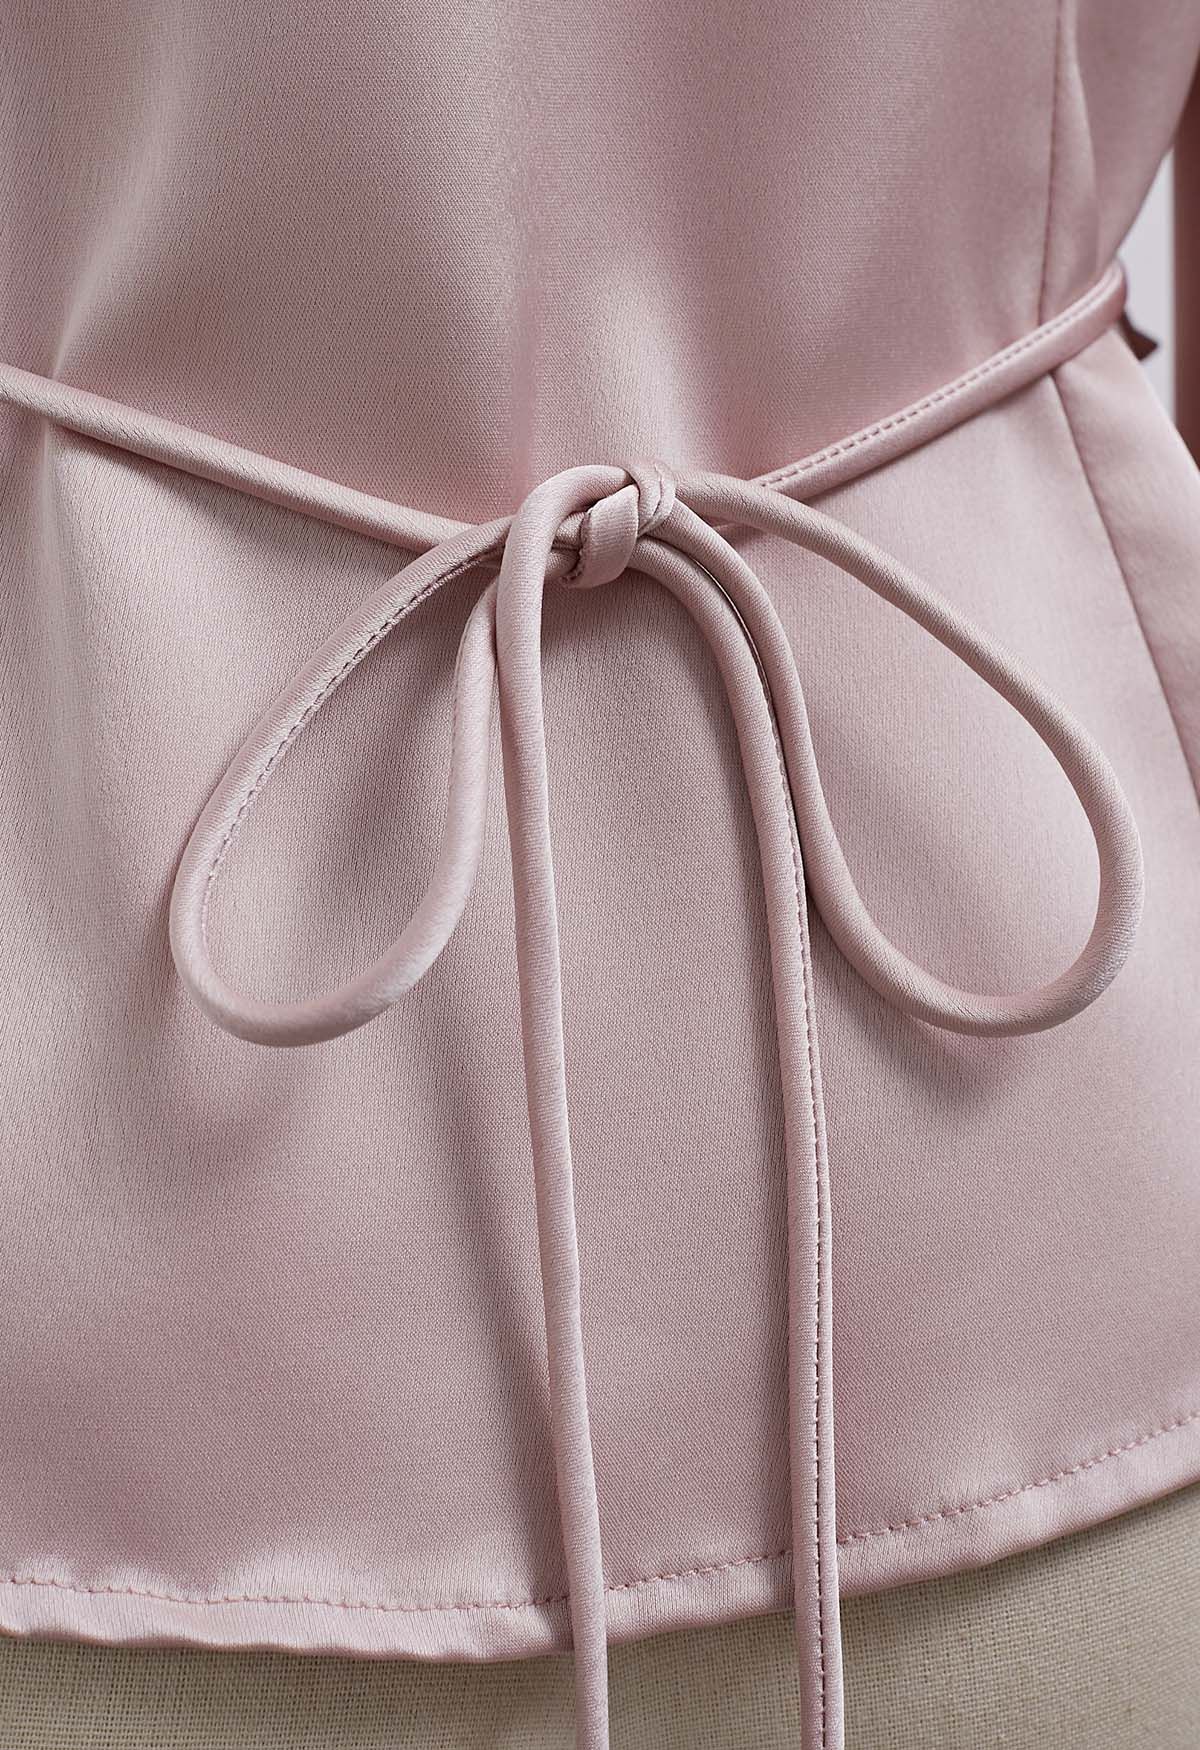 Pointed Collar Tie-Waist Satin Wrap Top in Pink